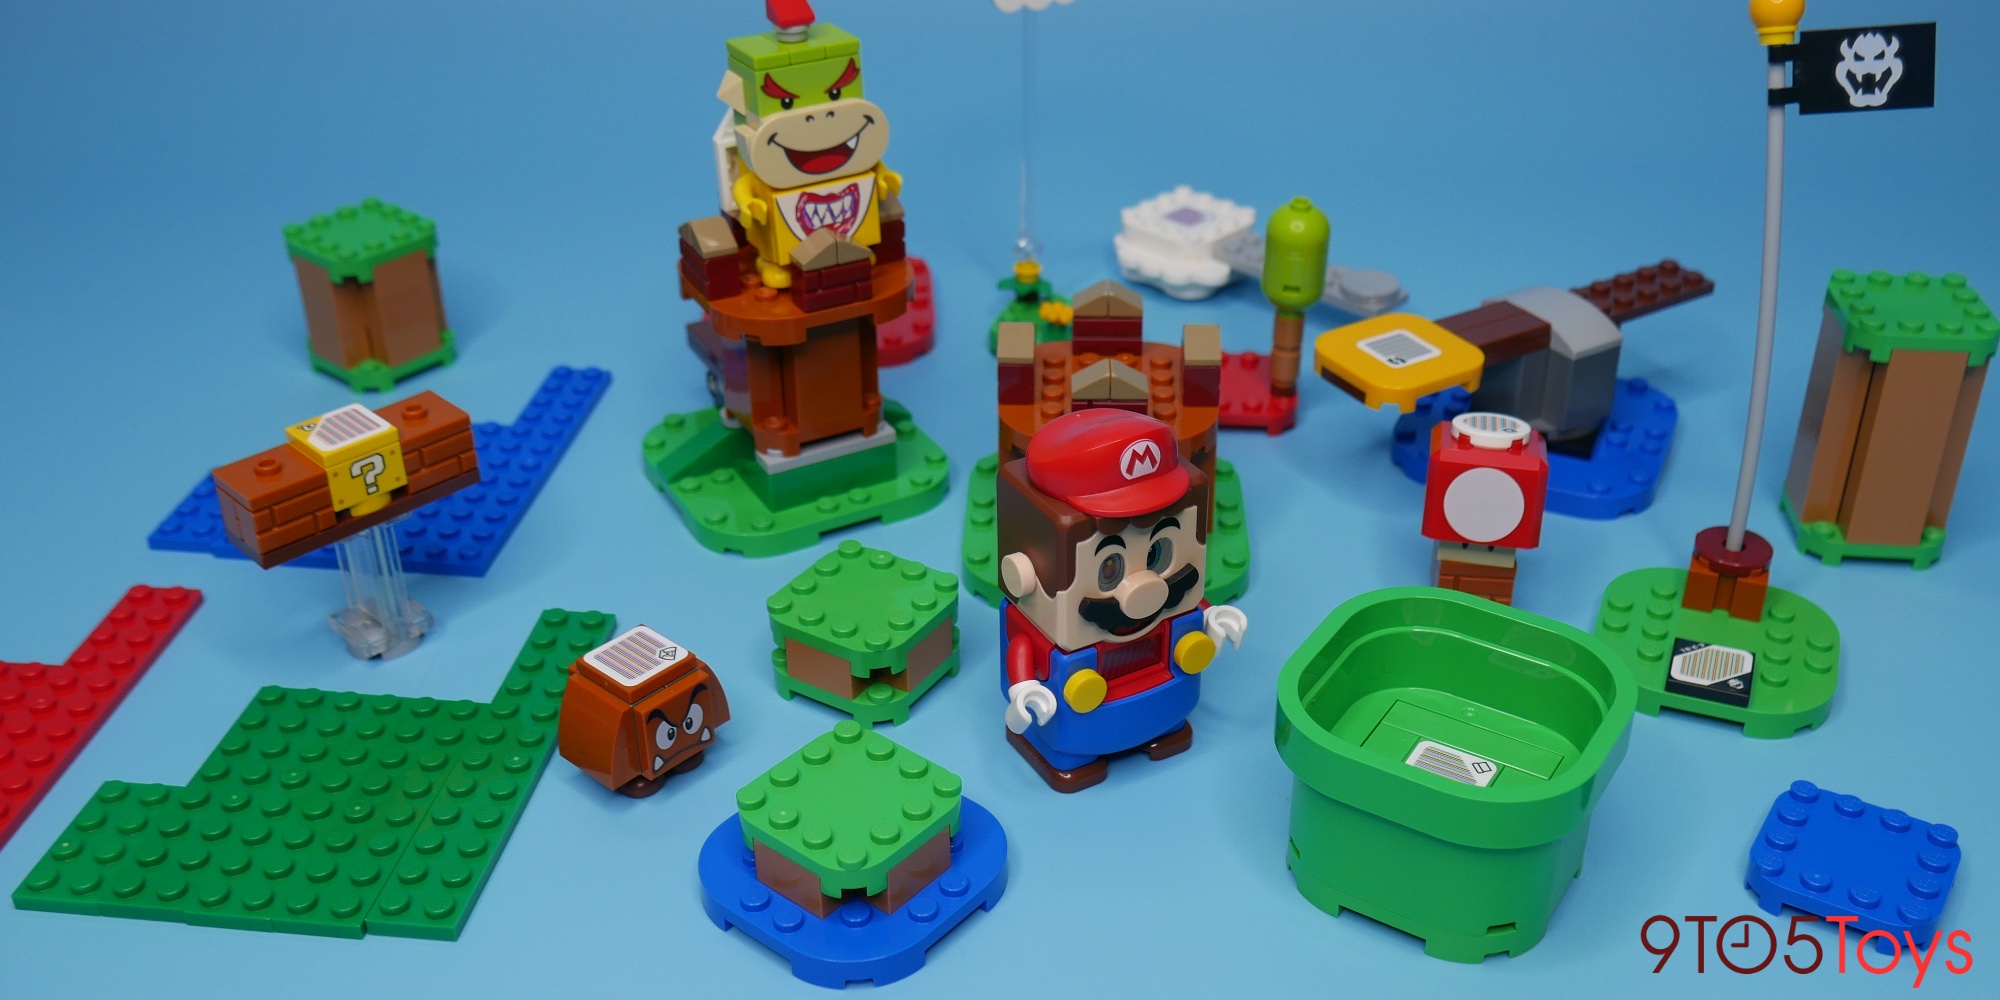 Lego Super Mario Review A Nintendo Iconc S Brick Built Debut 9to5toys